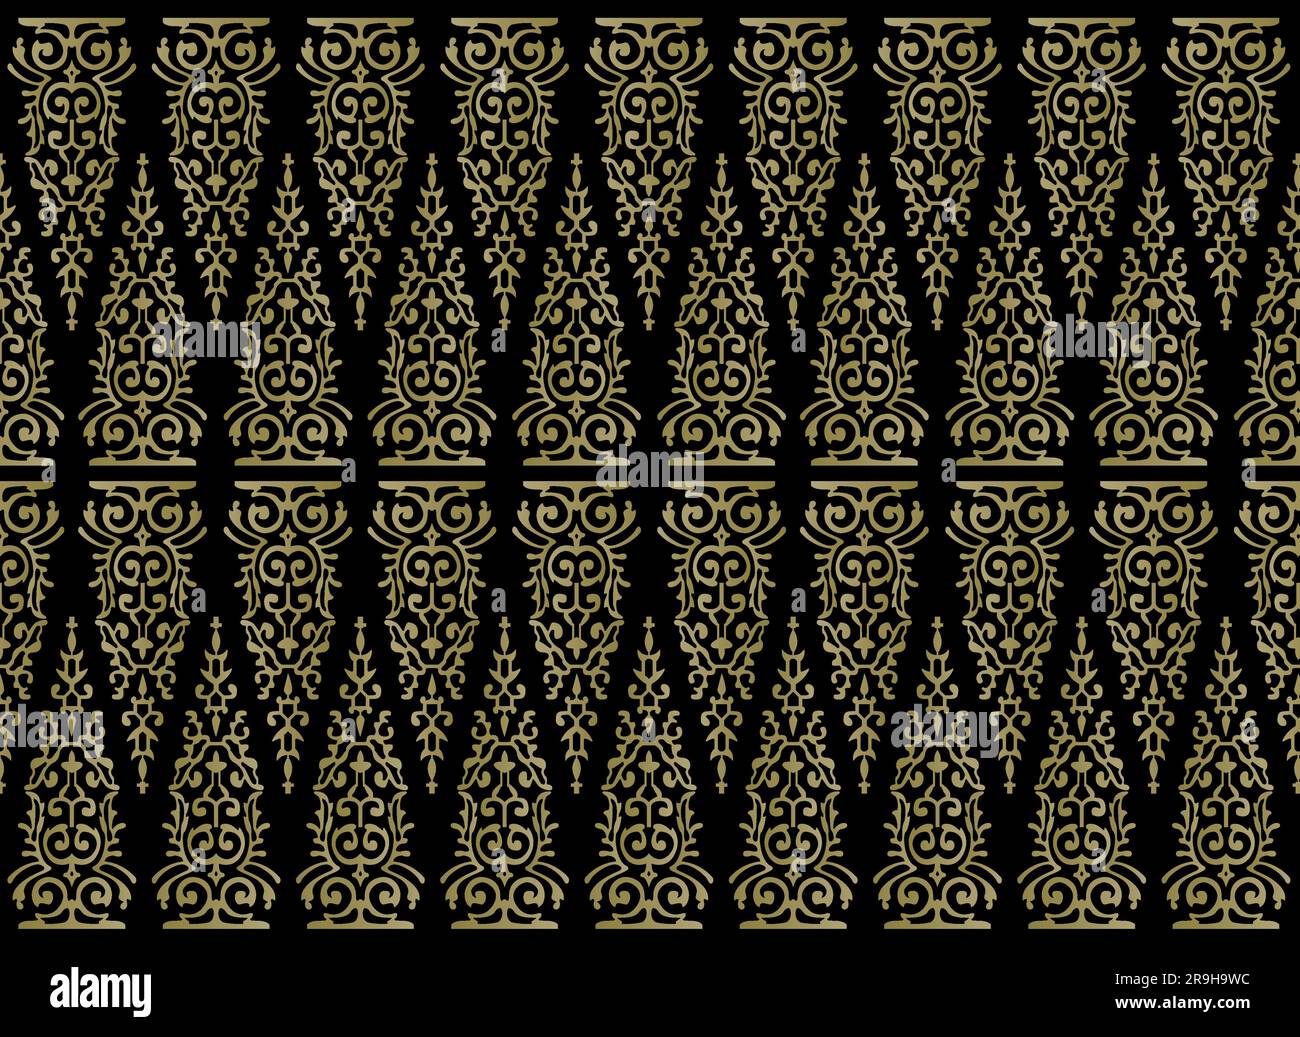 Indonesian Traditional Batik — Fabric Design